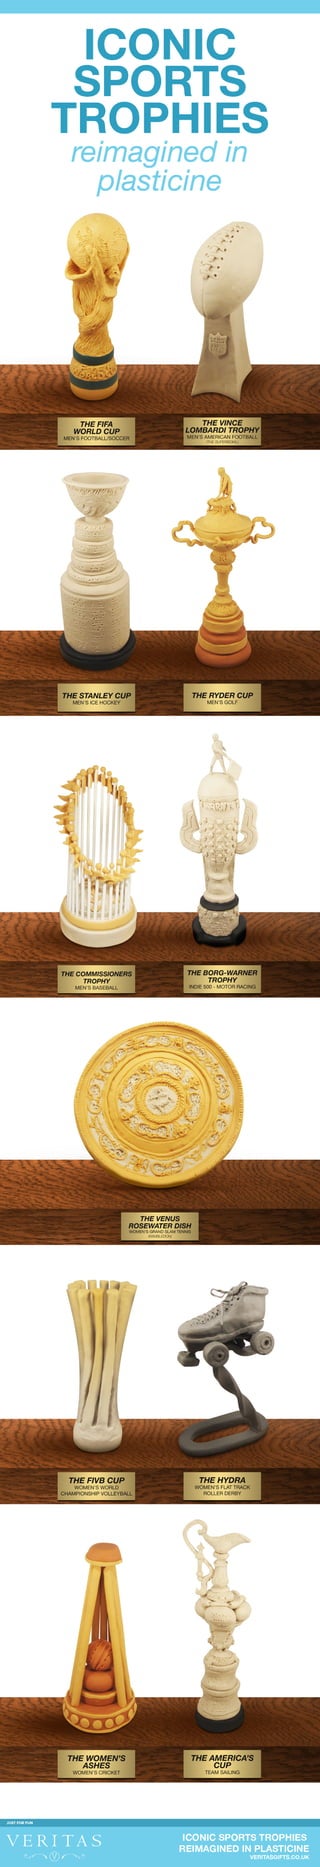 Iconic Trophies, reimagined in plasticine